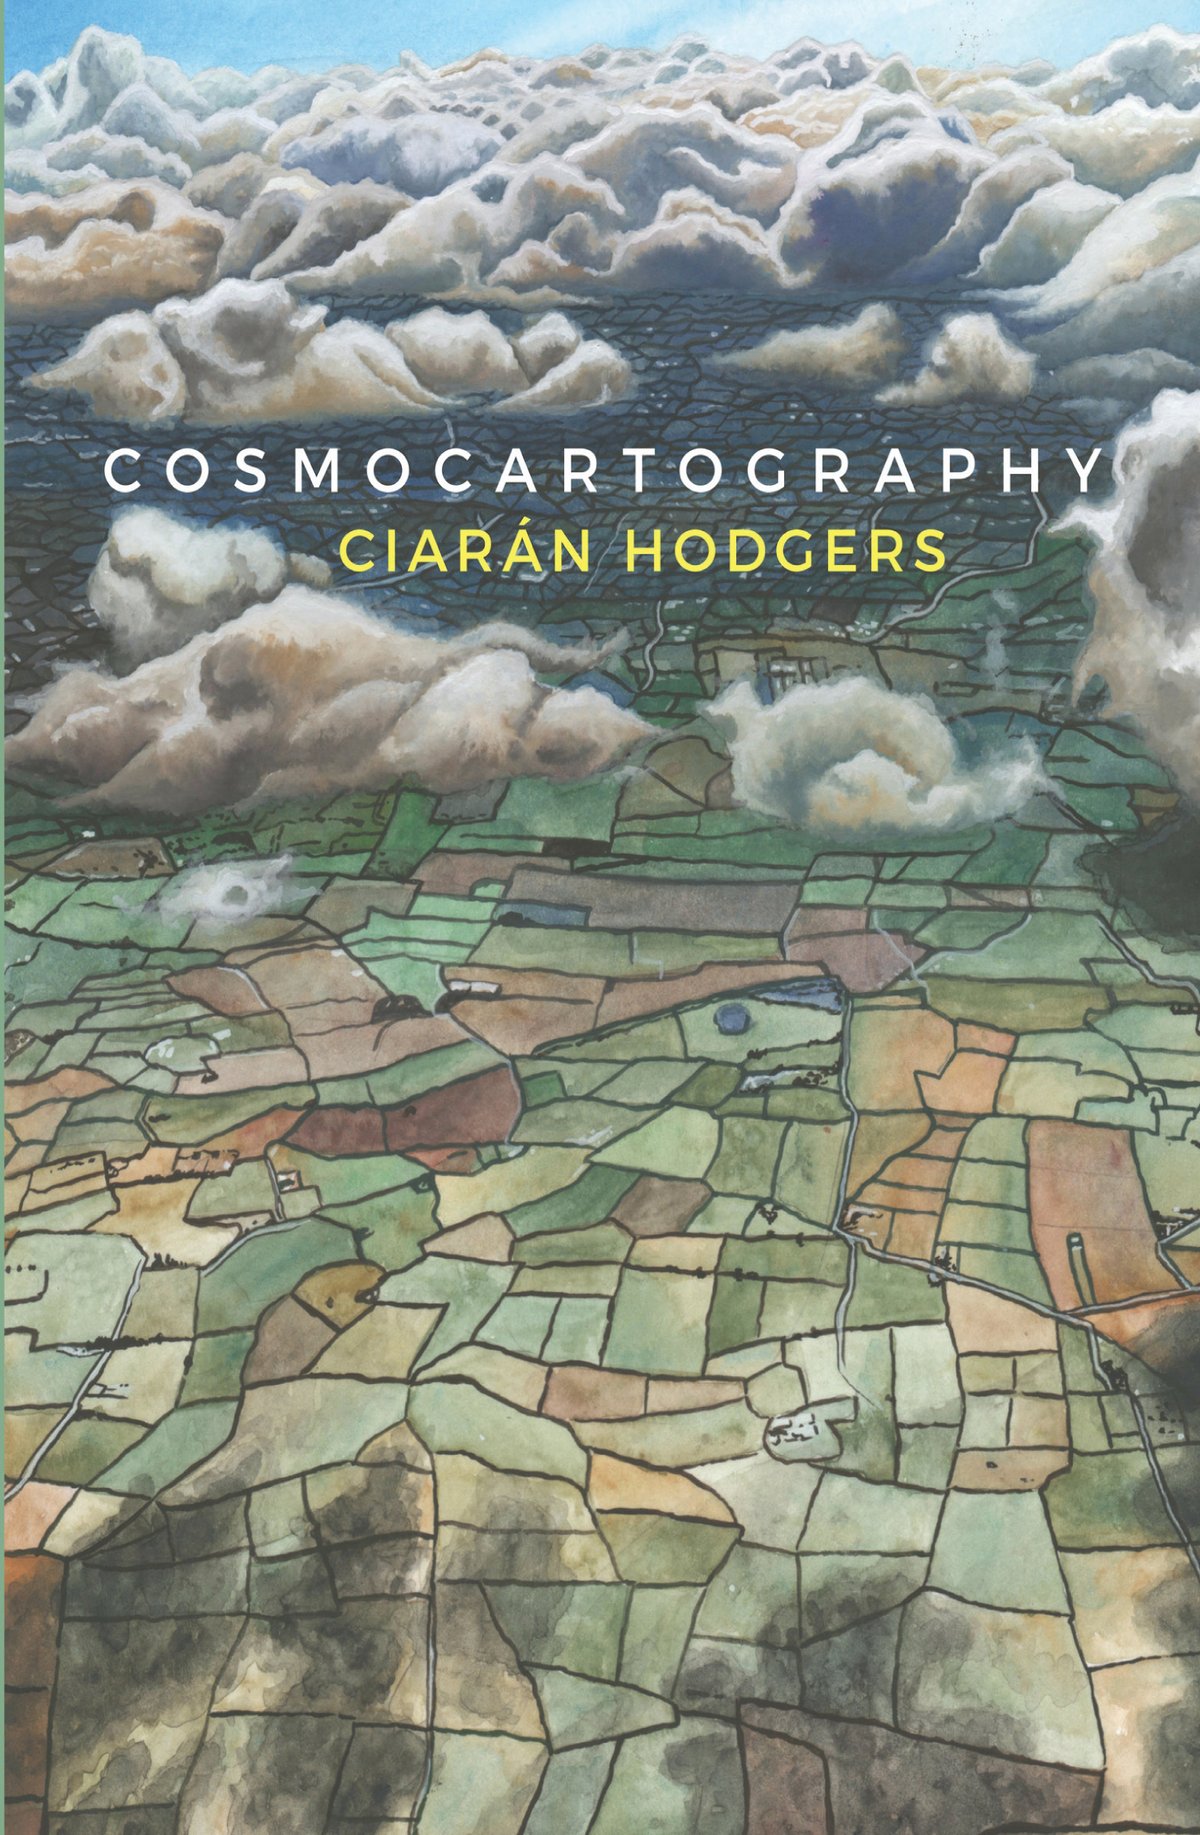 Image of Cosmocartography by Ciarán Hodgers